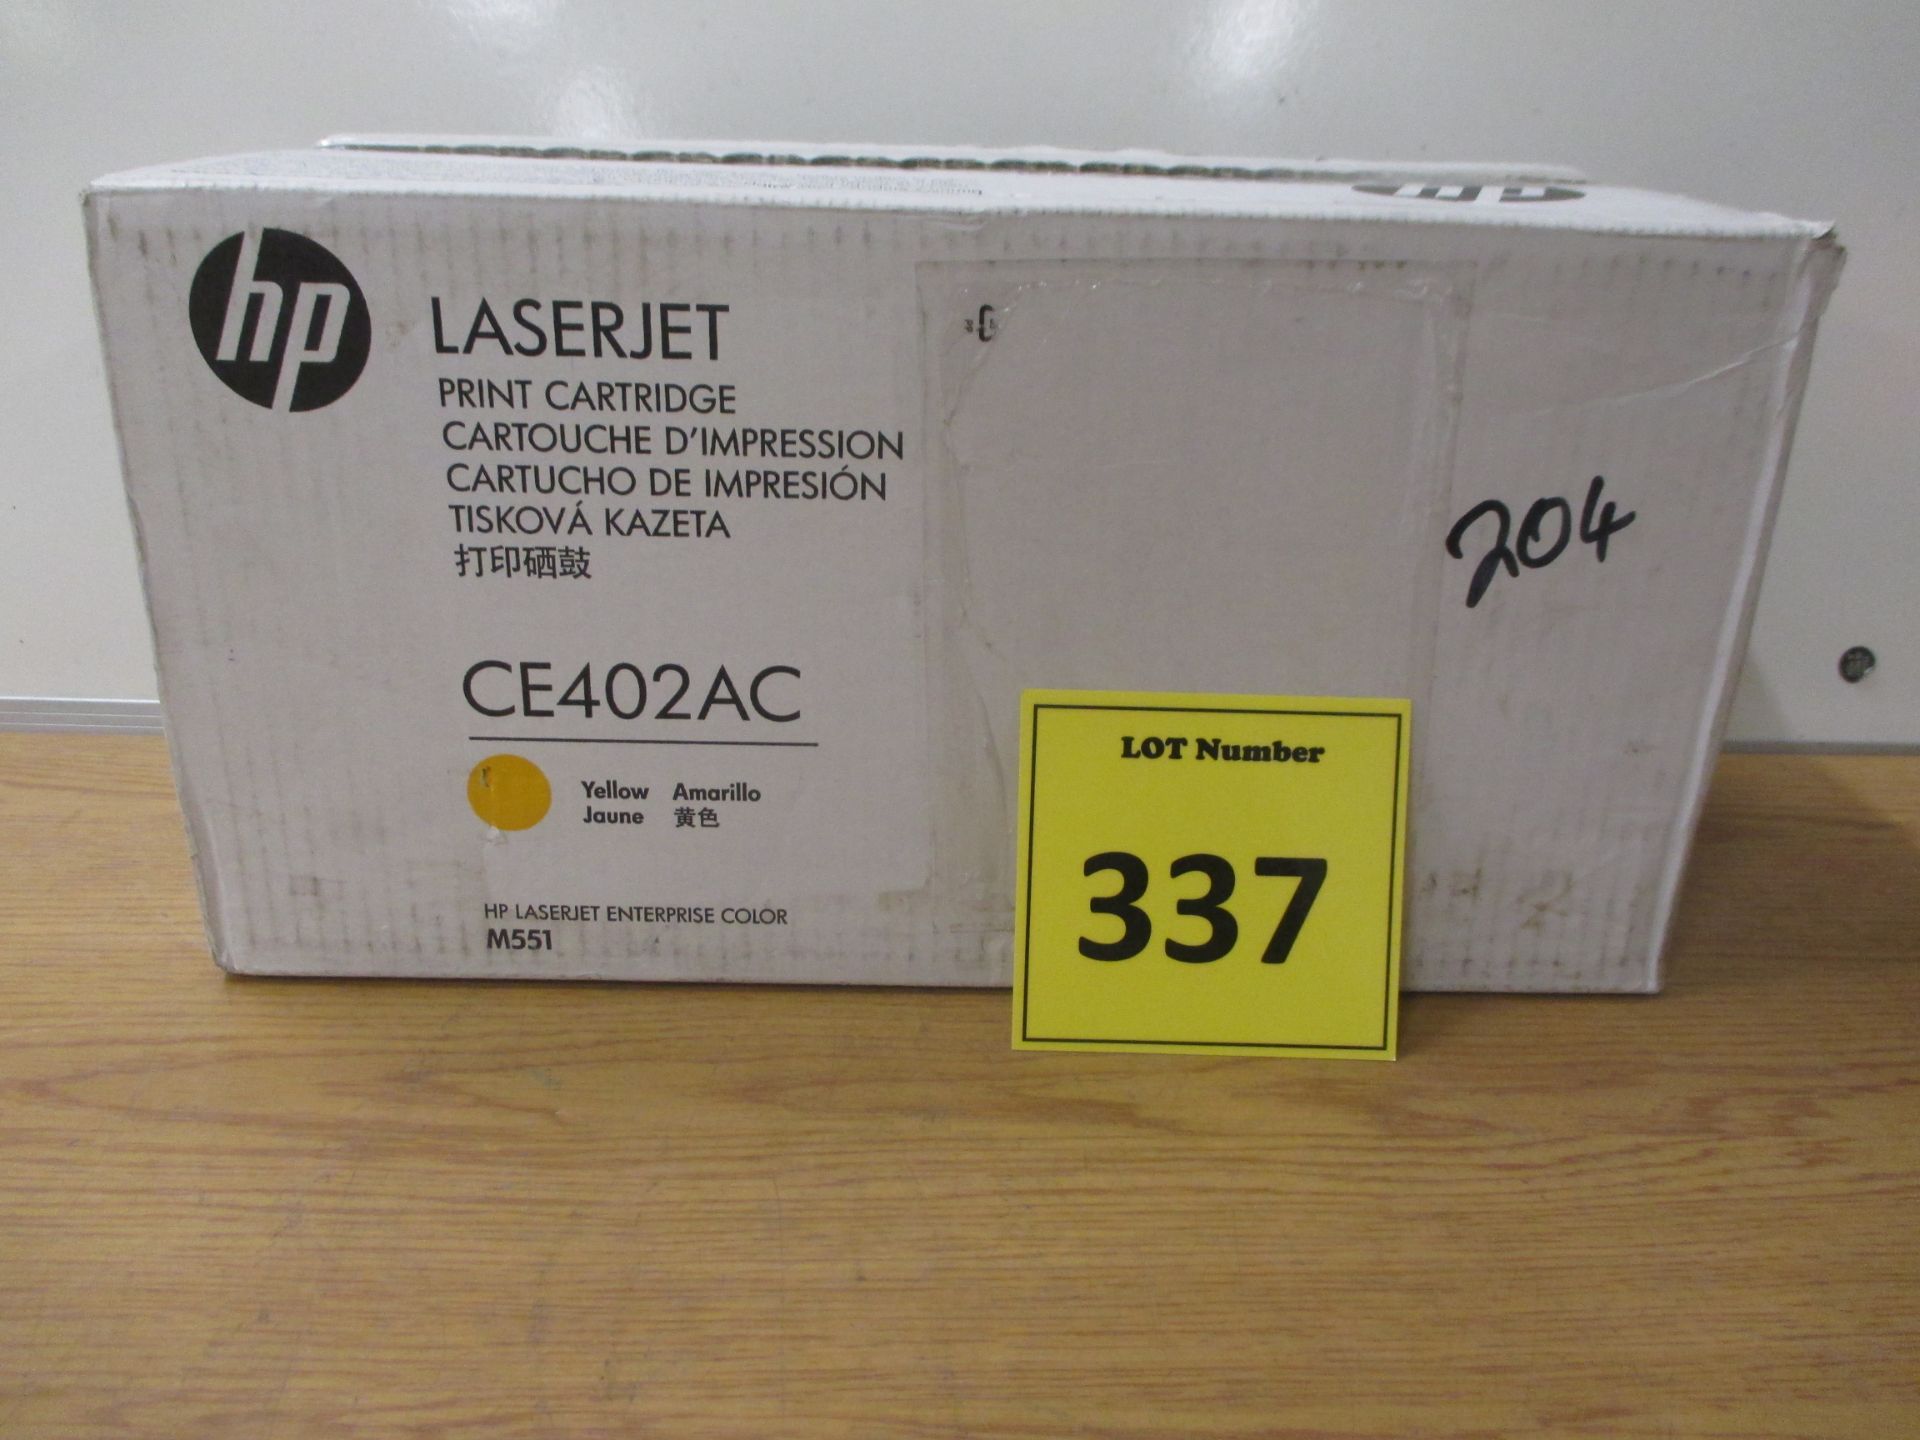 HP GENUINE ORIGINAL YELLOW PRINT CARTRIDGE (CE402AC) FOR HP LASERJET ENTERPRISE COLOUR M551. BOX